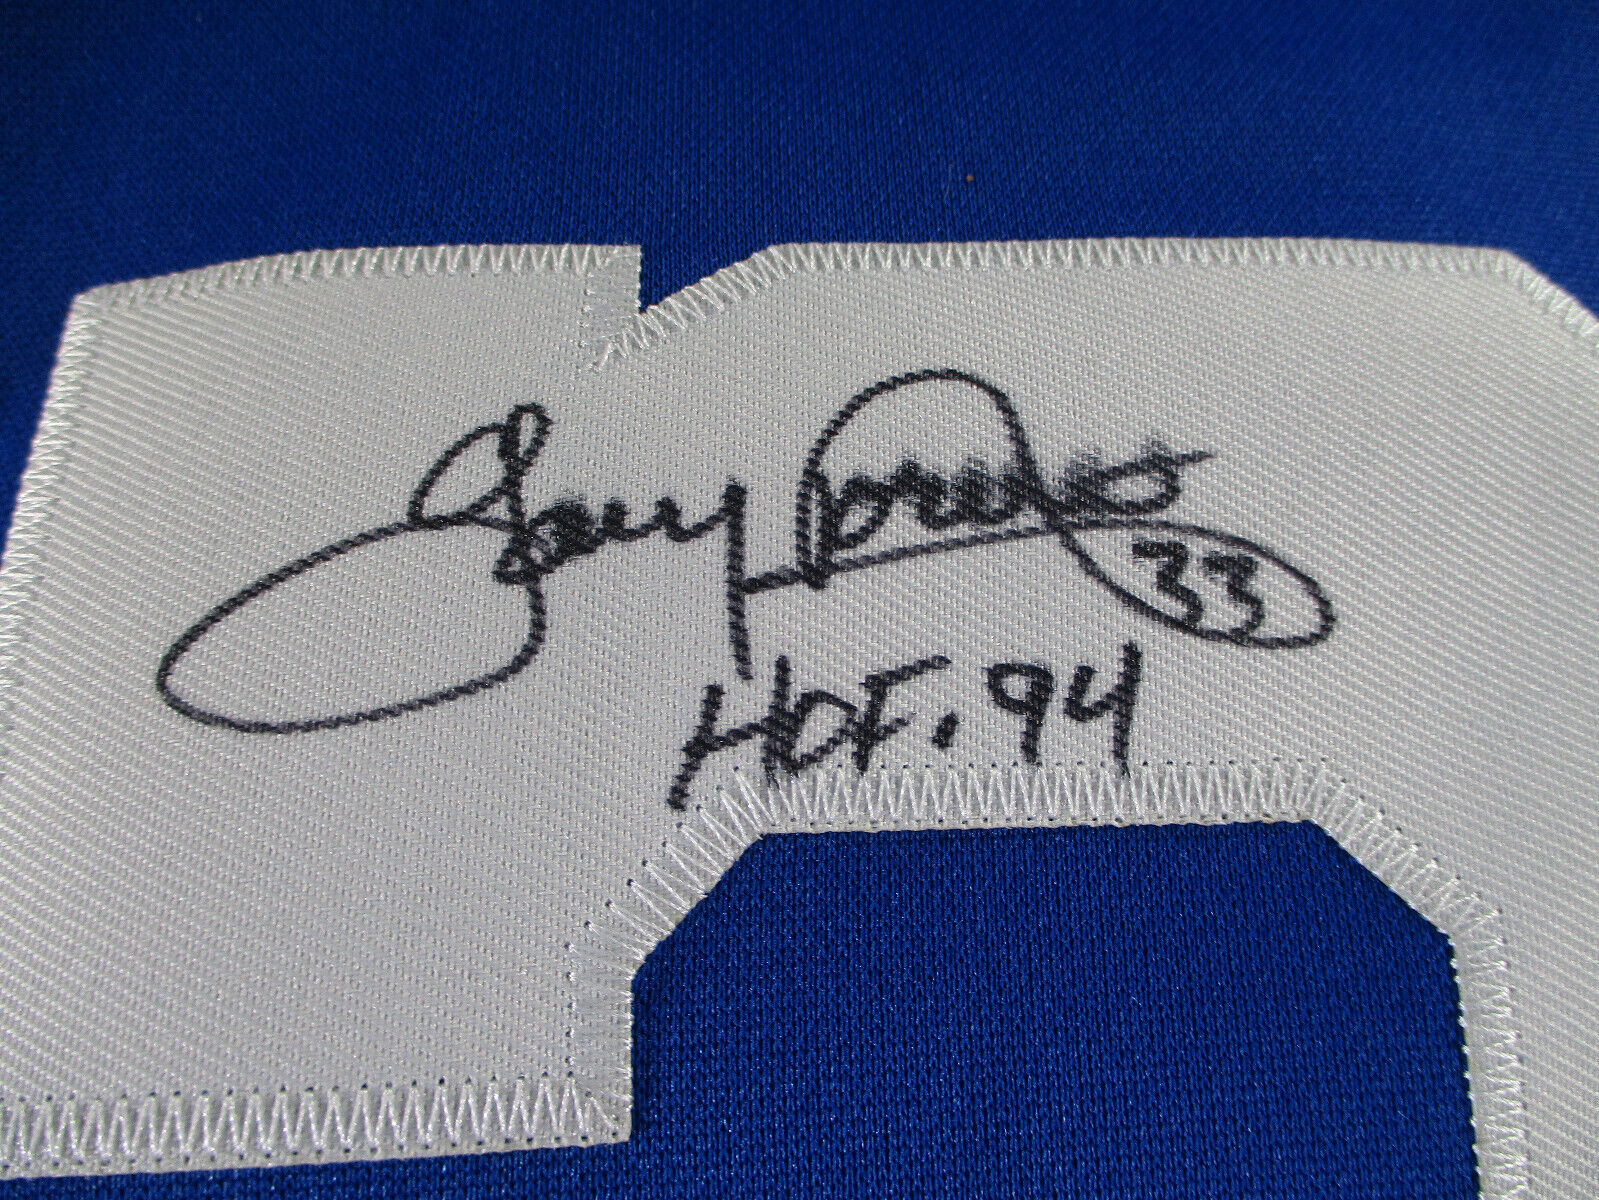 Tony Dorsett / Hall Of Fame/ Autographed Dallas Cowboys Throwback Jersey / COA